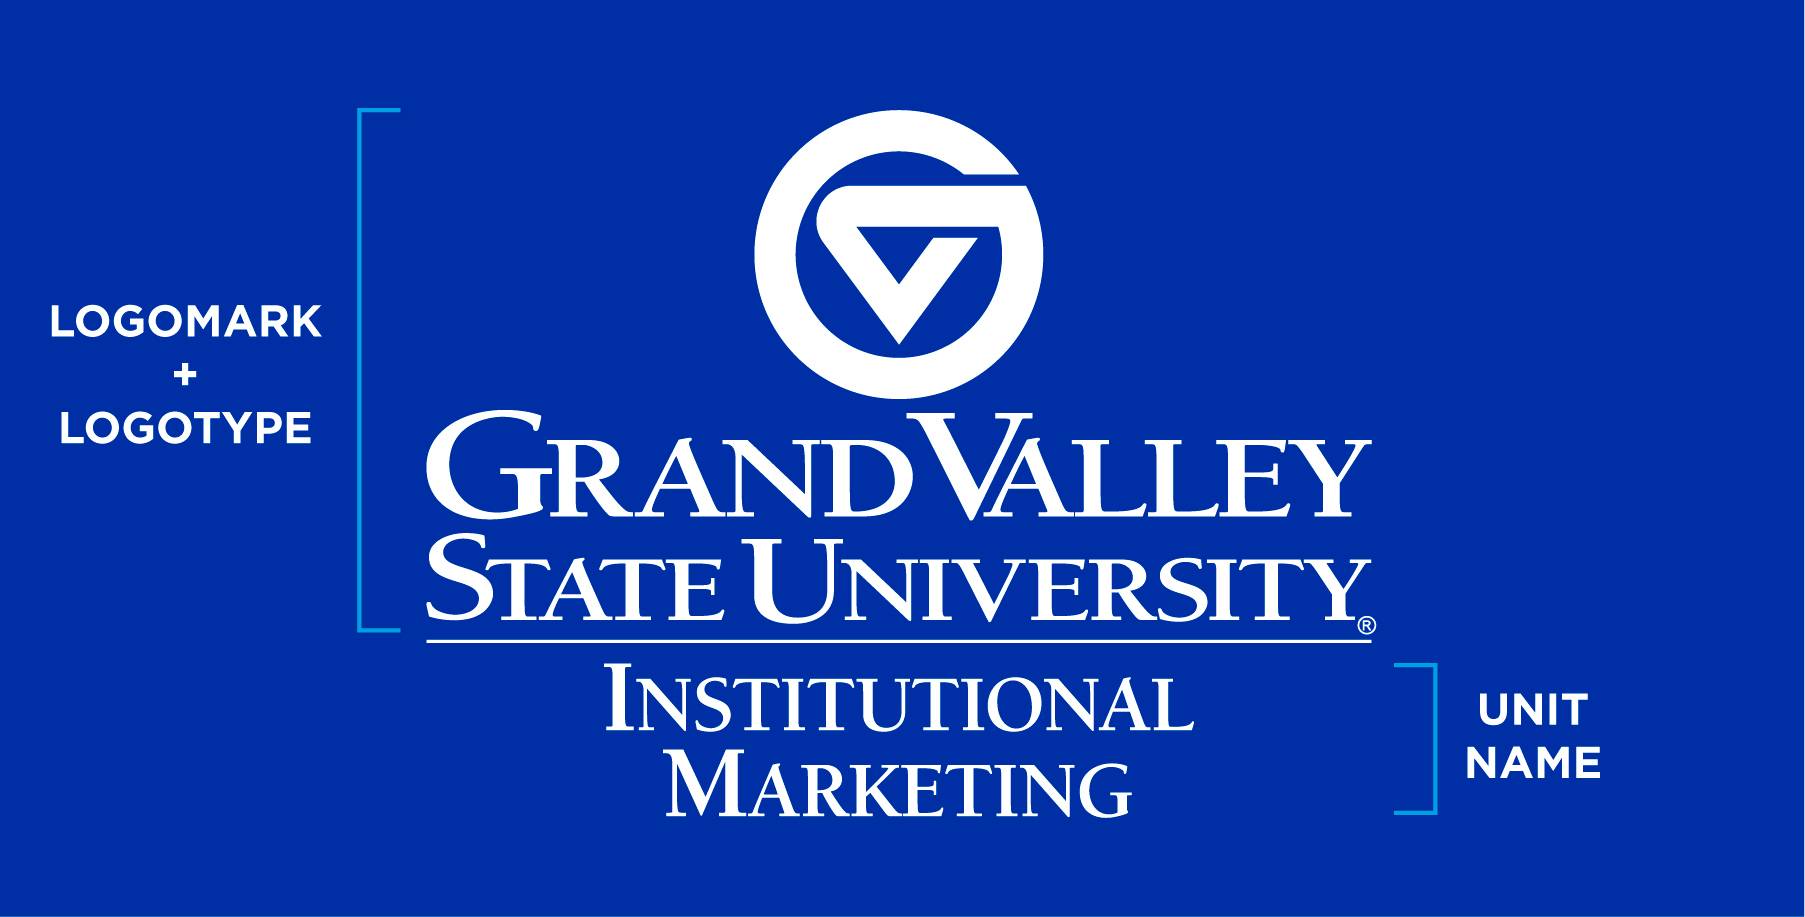 University Marketing combination logo